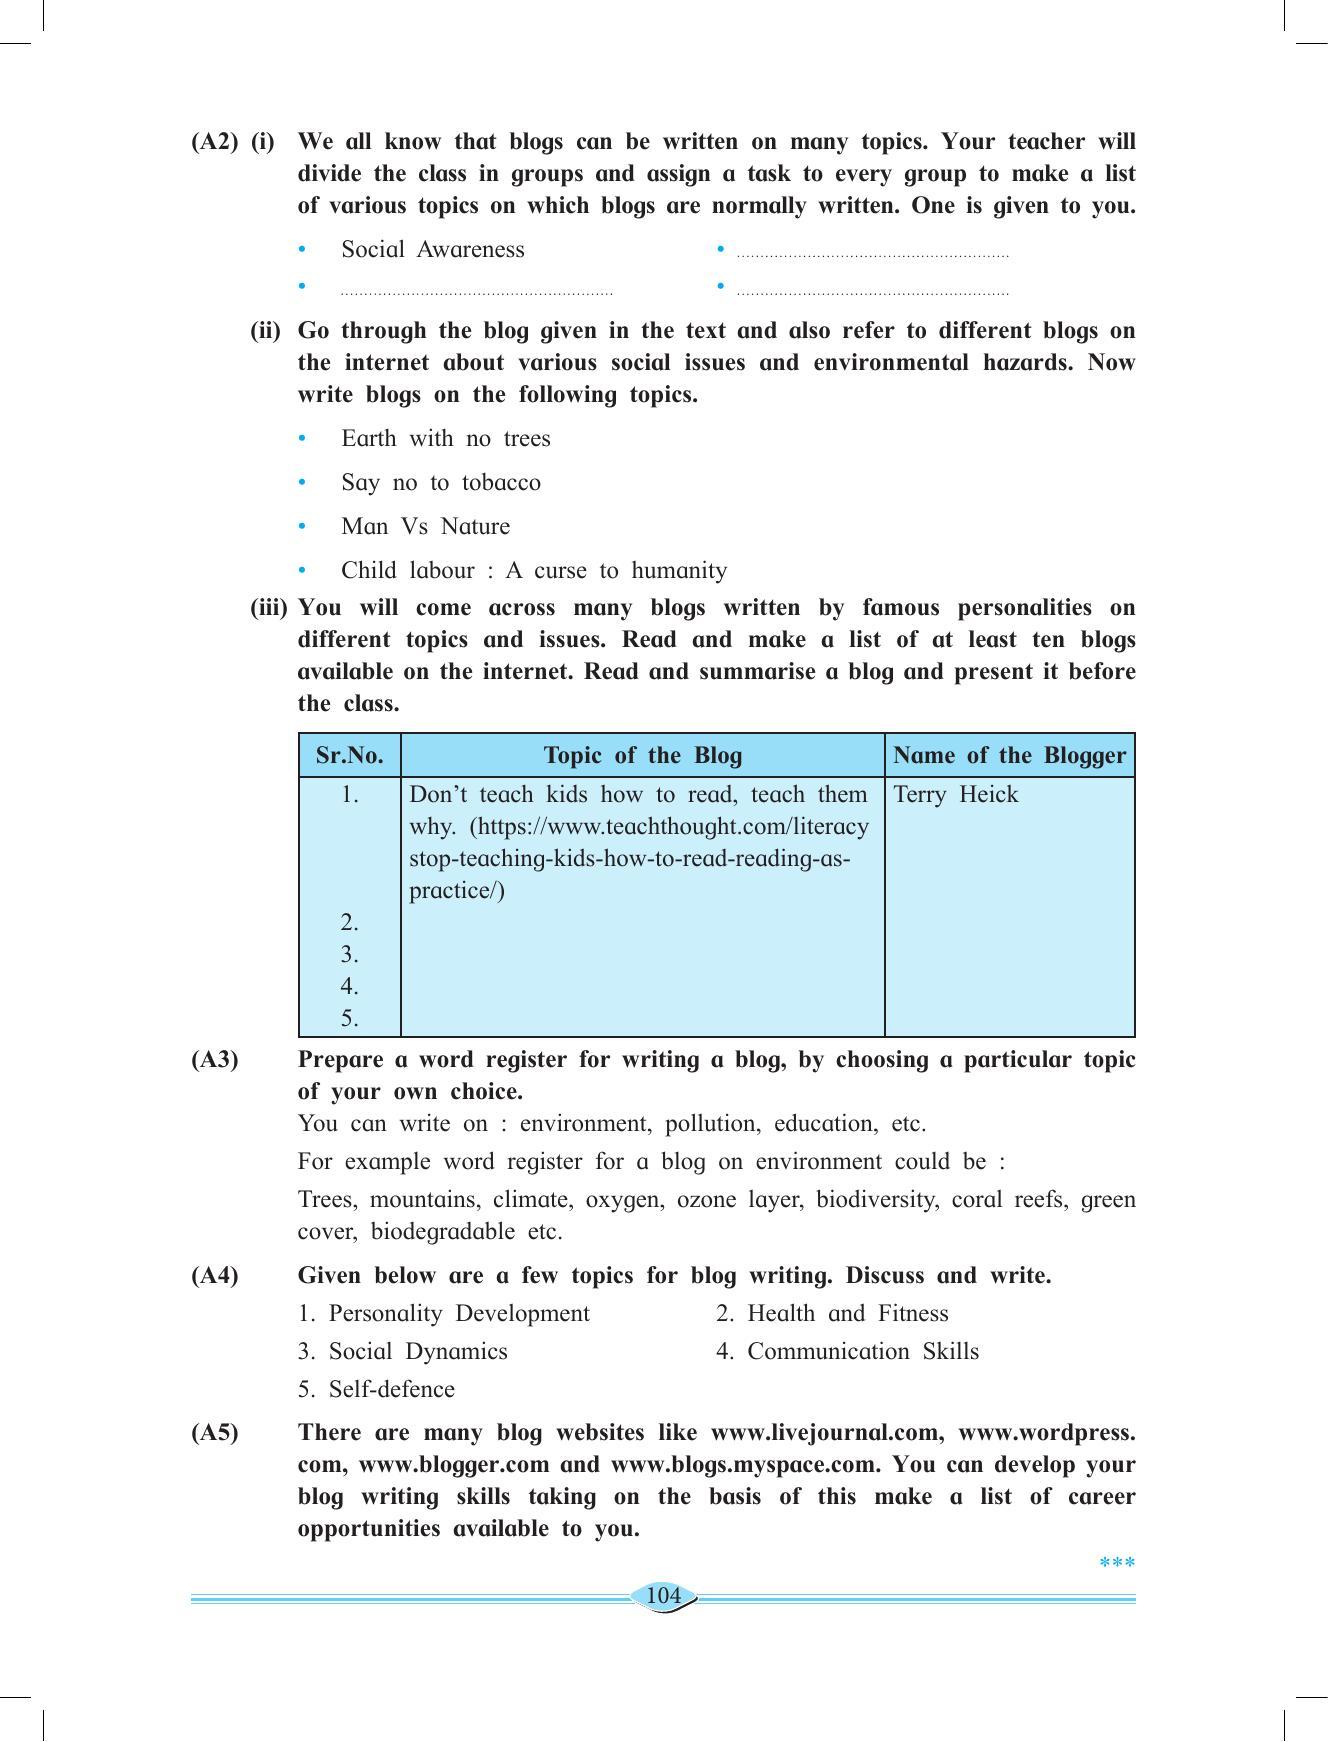 Maharashtra Board Class 11 English Textbook - Page 118